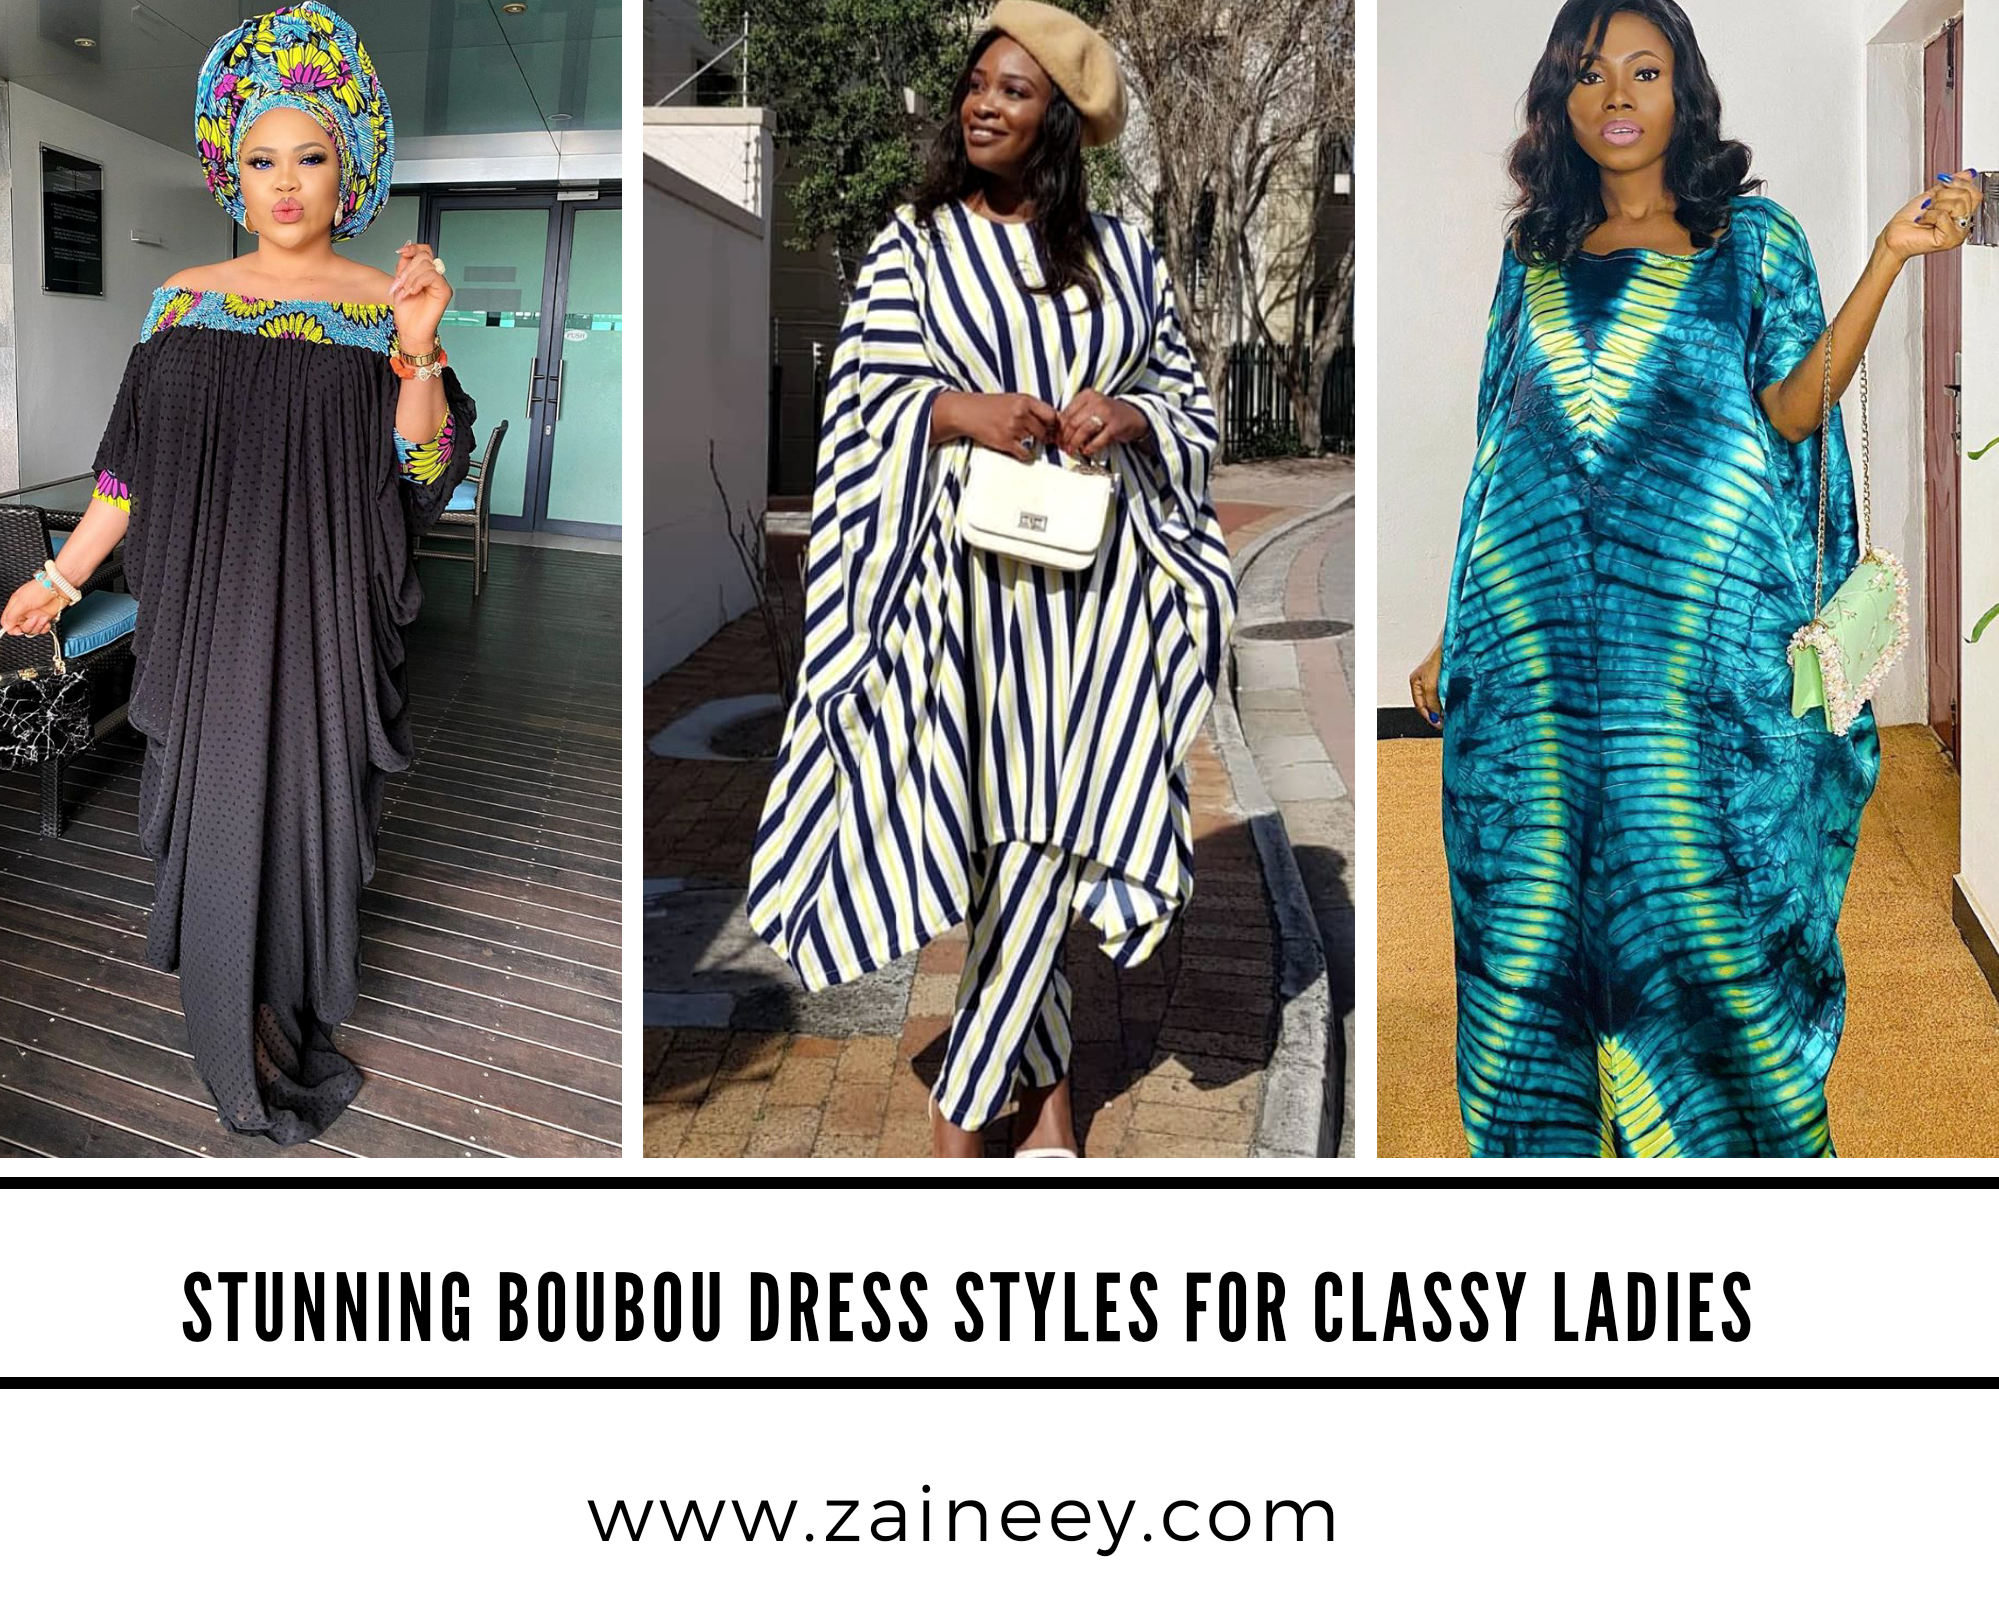 Elegant, Stylish, and Stunning Boubou Dress Styles for Classy Ladies